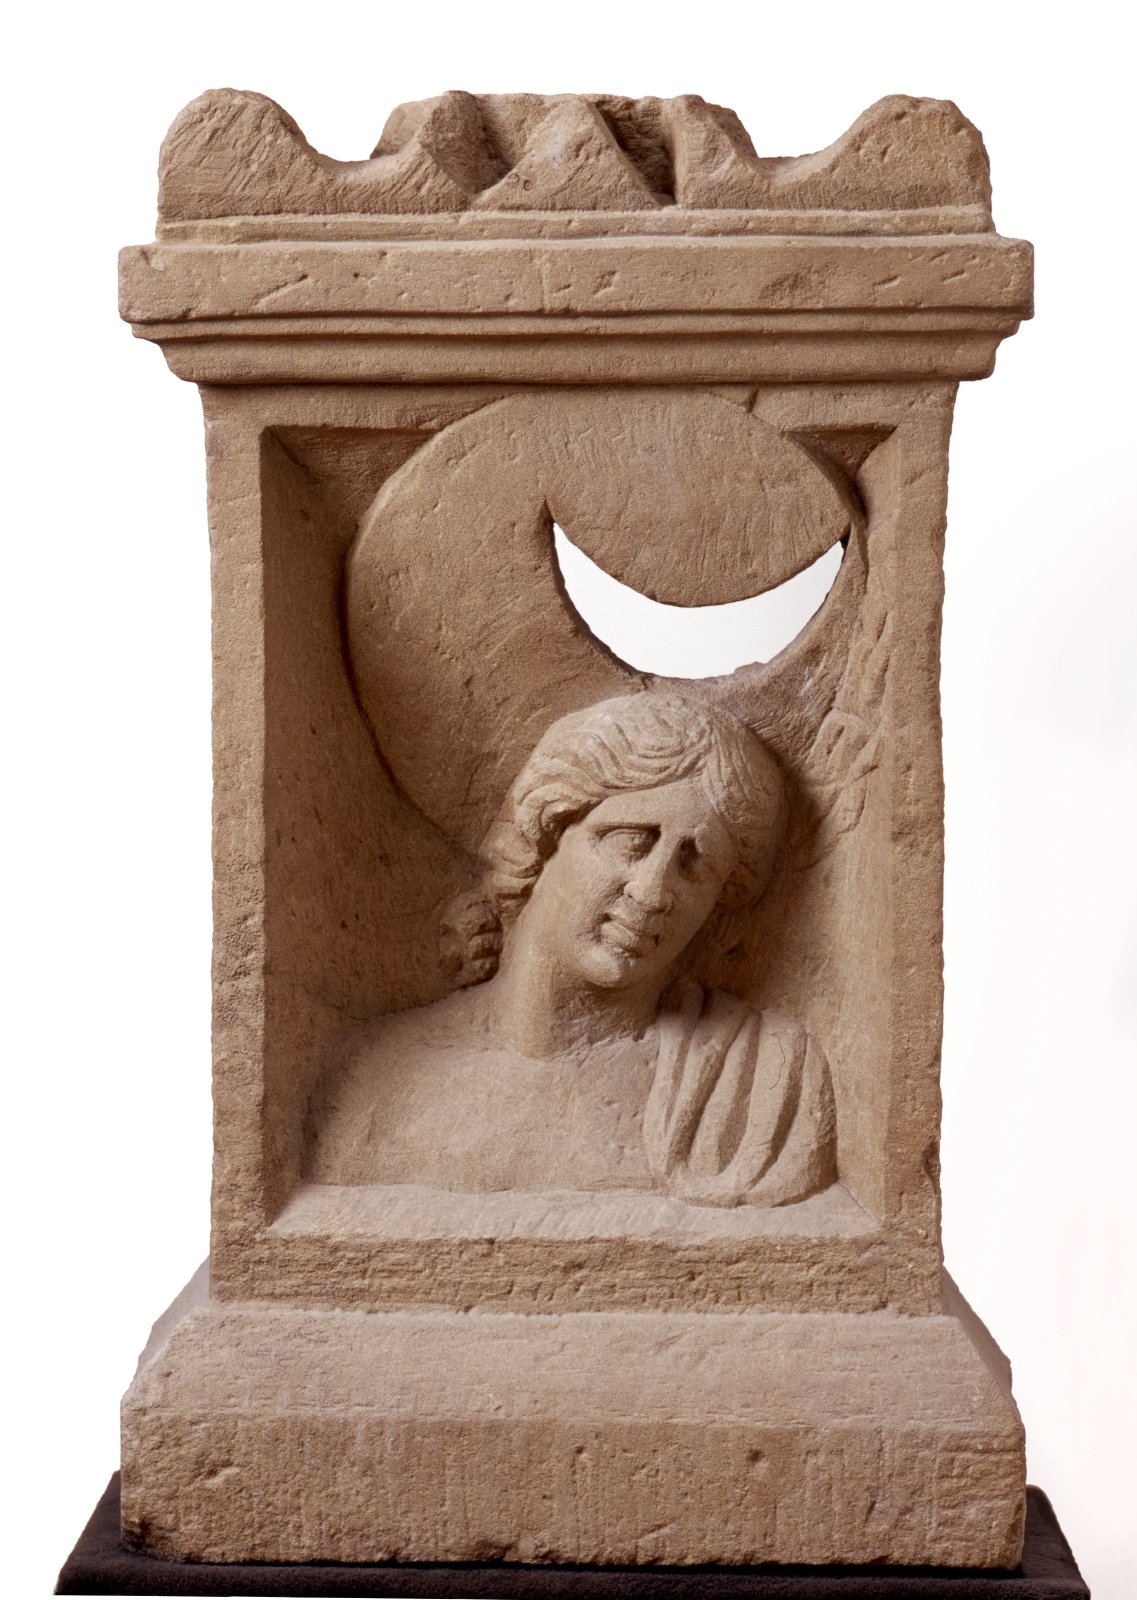 Luna altar from Mundelsheim